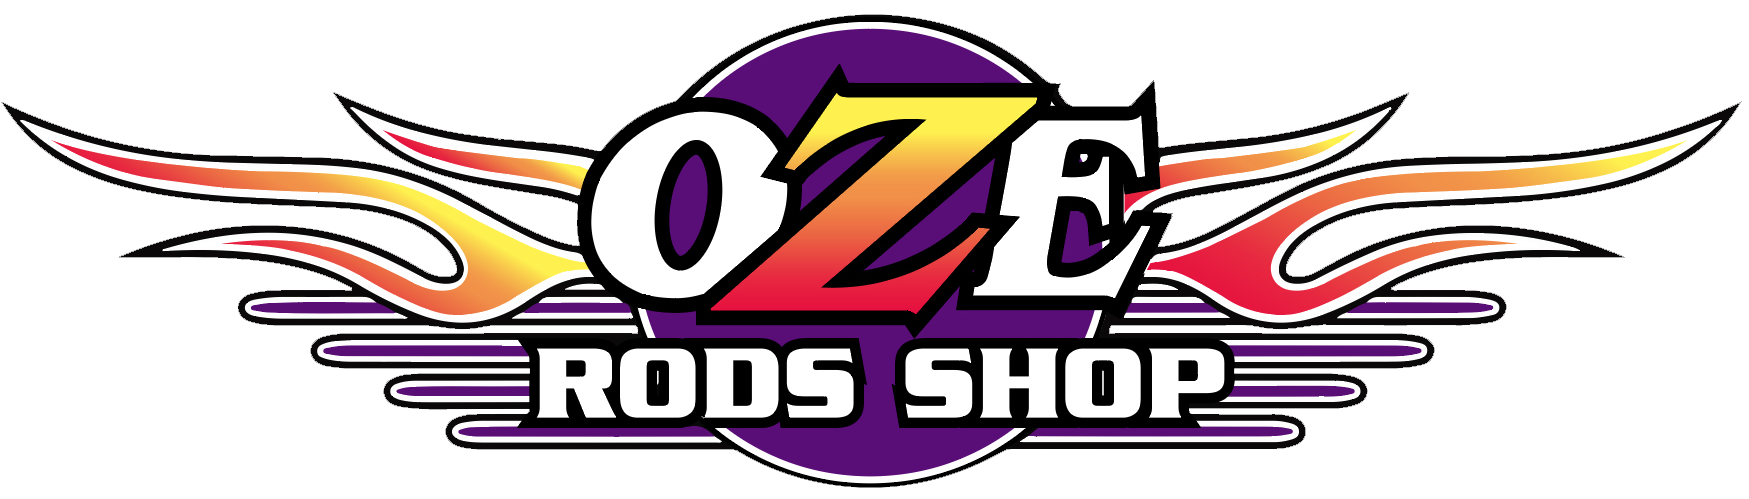 oze rods shop logo